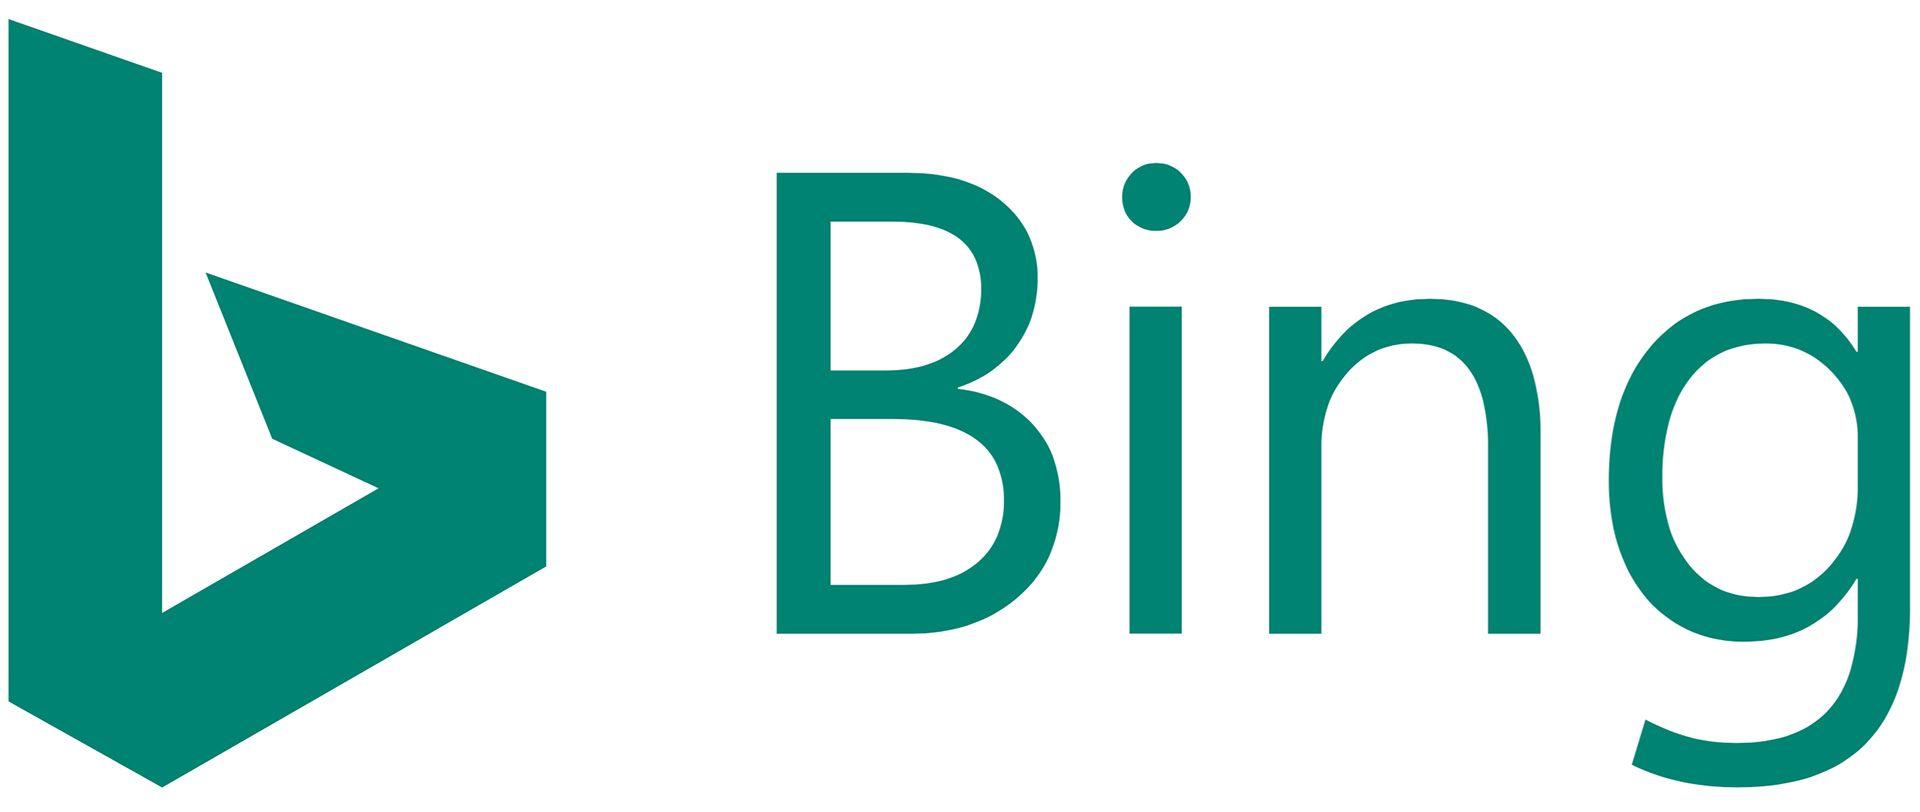 Bing Teal Logo - Bing To Use Location for RTBF. Bing Search Blog